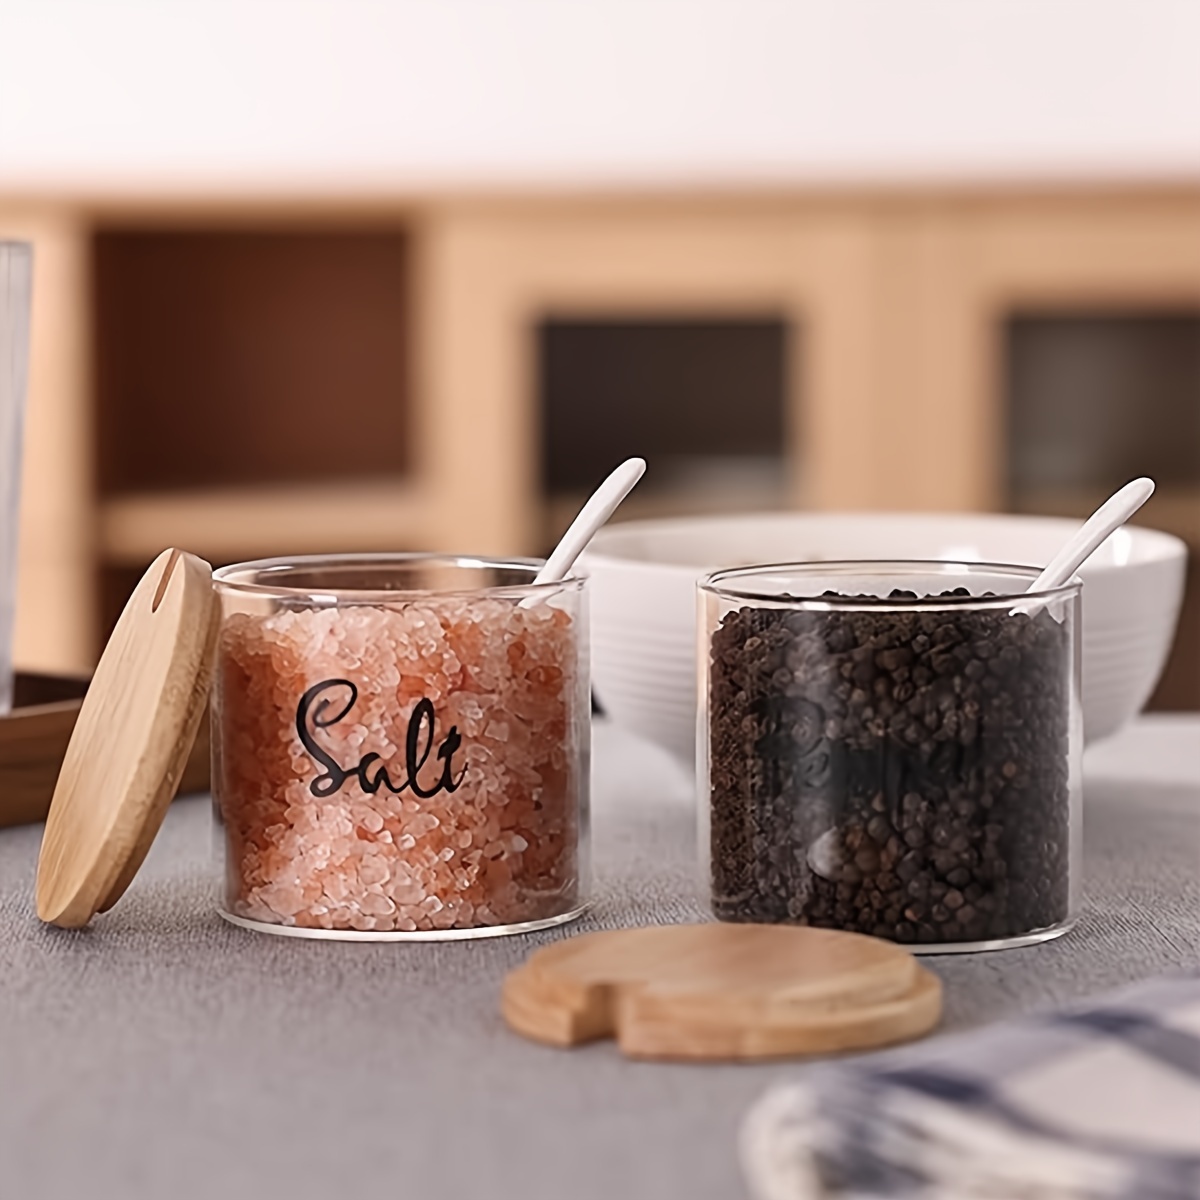 Lawei Set of 3 Condiment Jar with Lids and Spoons - Glass Sugar Bowls Sugar  Salt Container Set for Sugar Serving Spice Salt